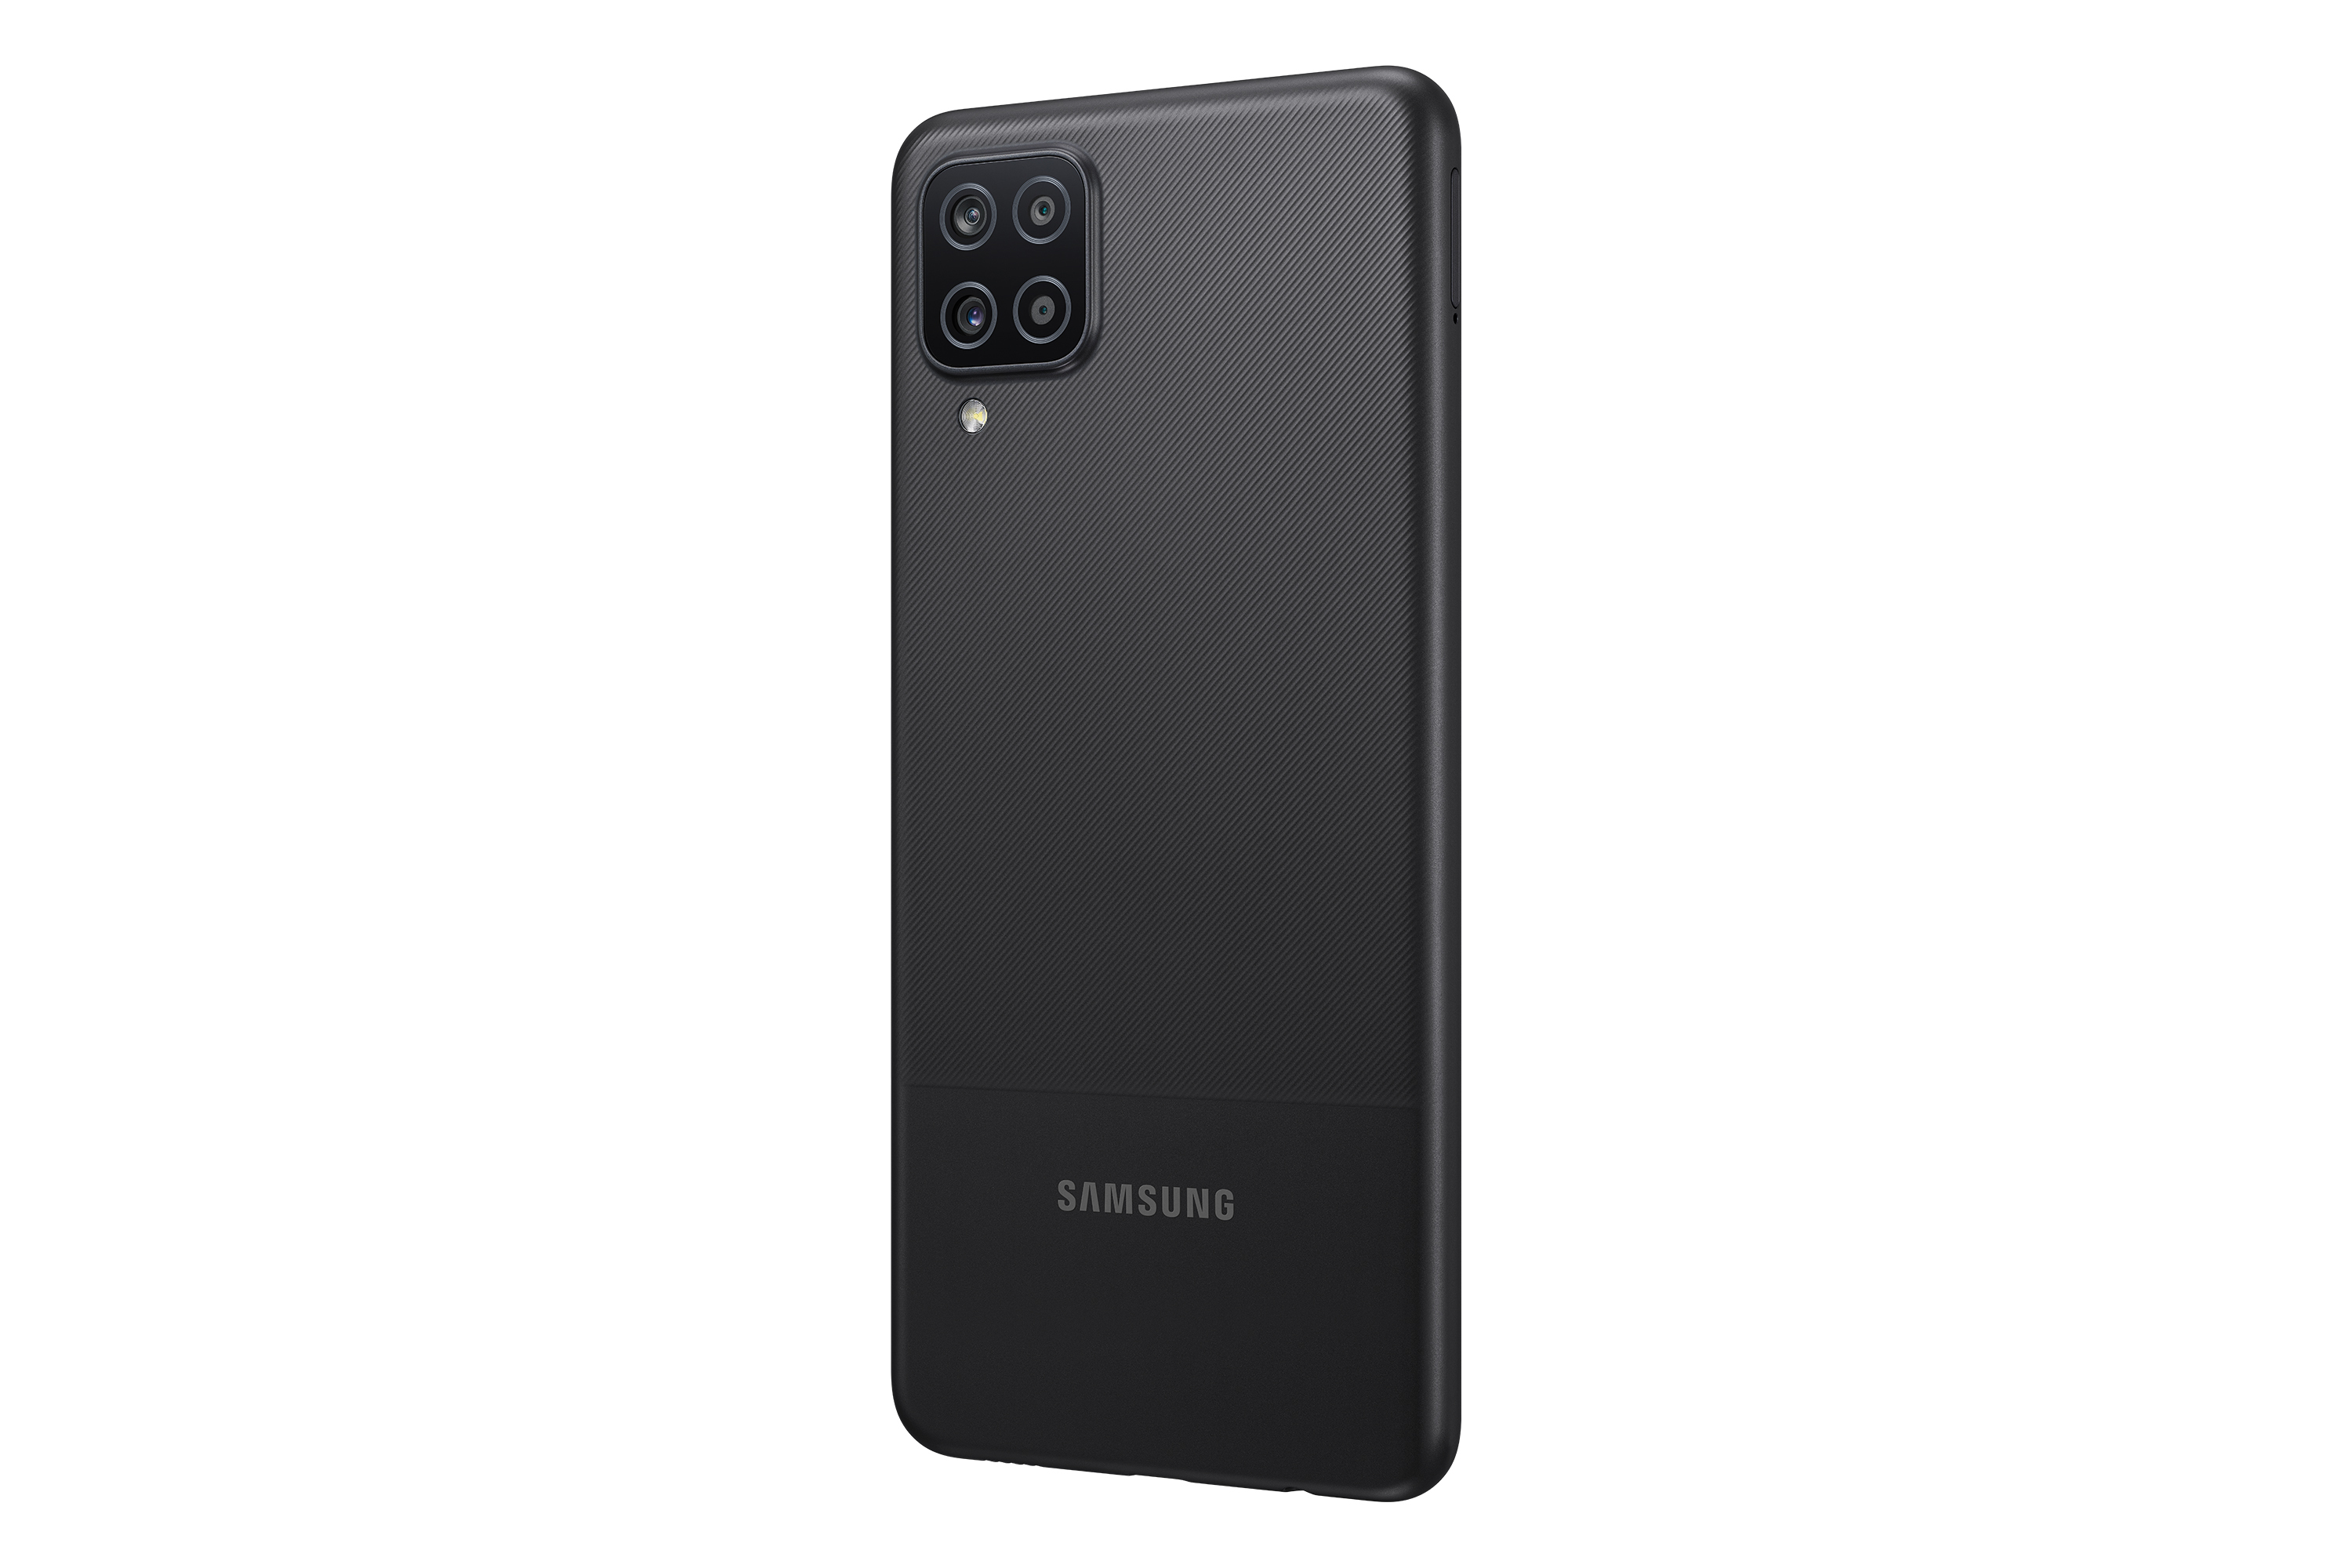 SAMSUNG Galaxy A12 - 32 GB Zwart, Android 10.0, 4G